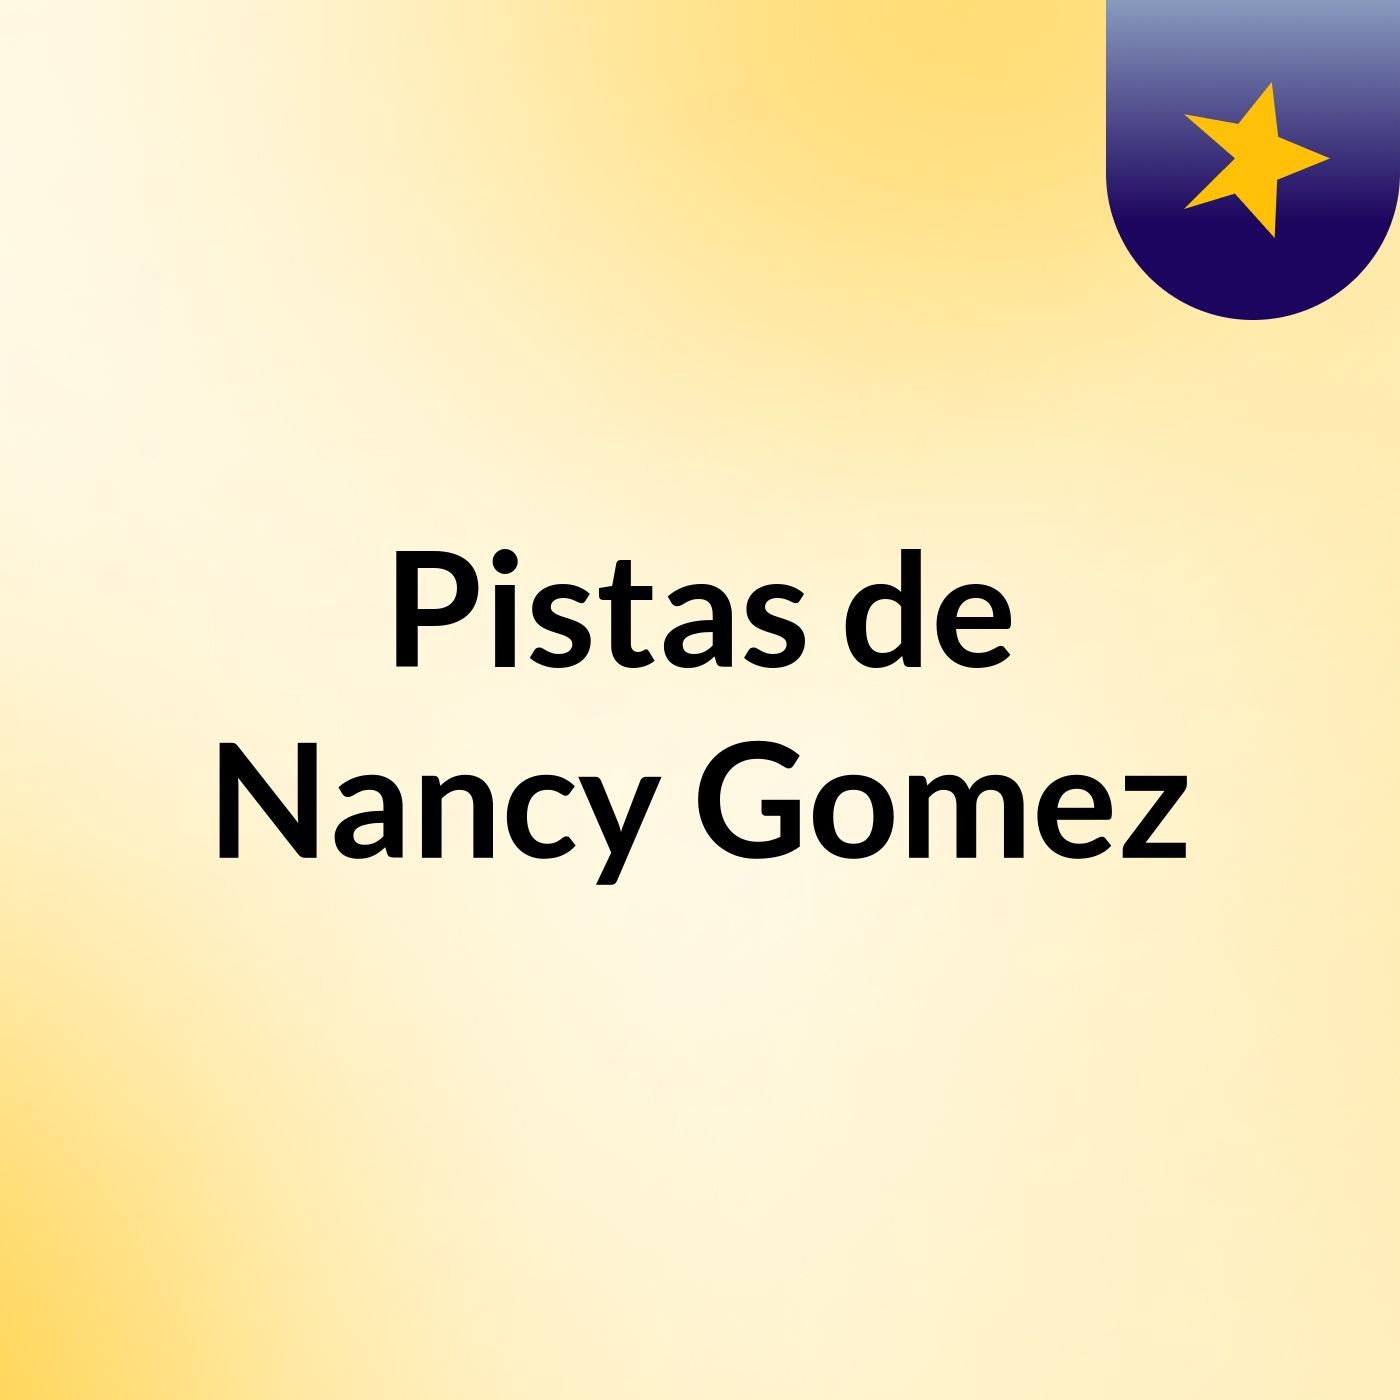 Pistas de Nancy Gomez